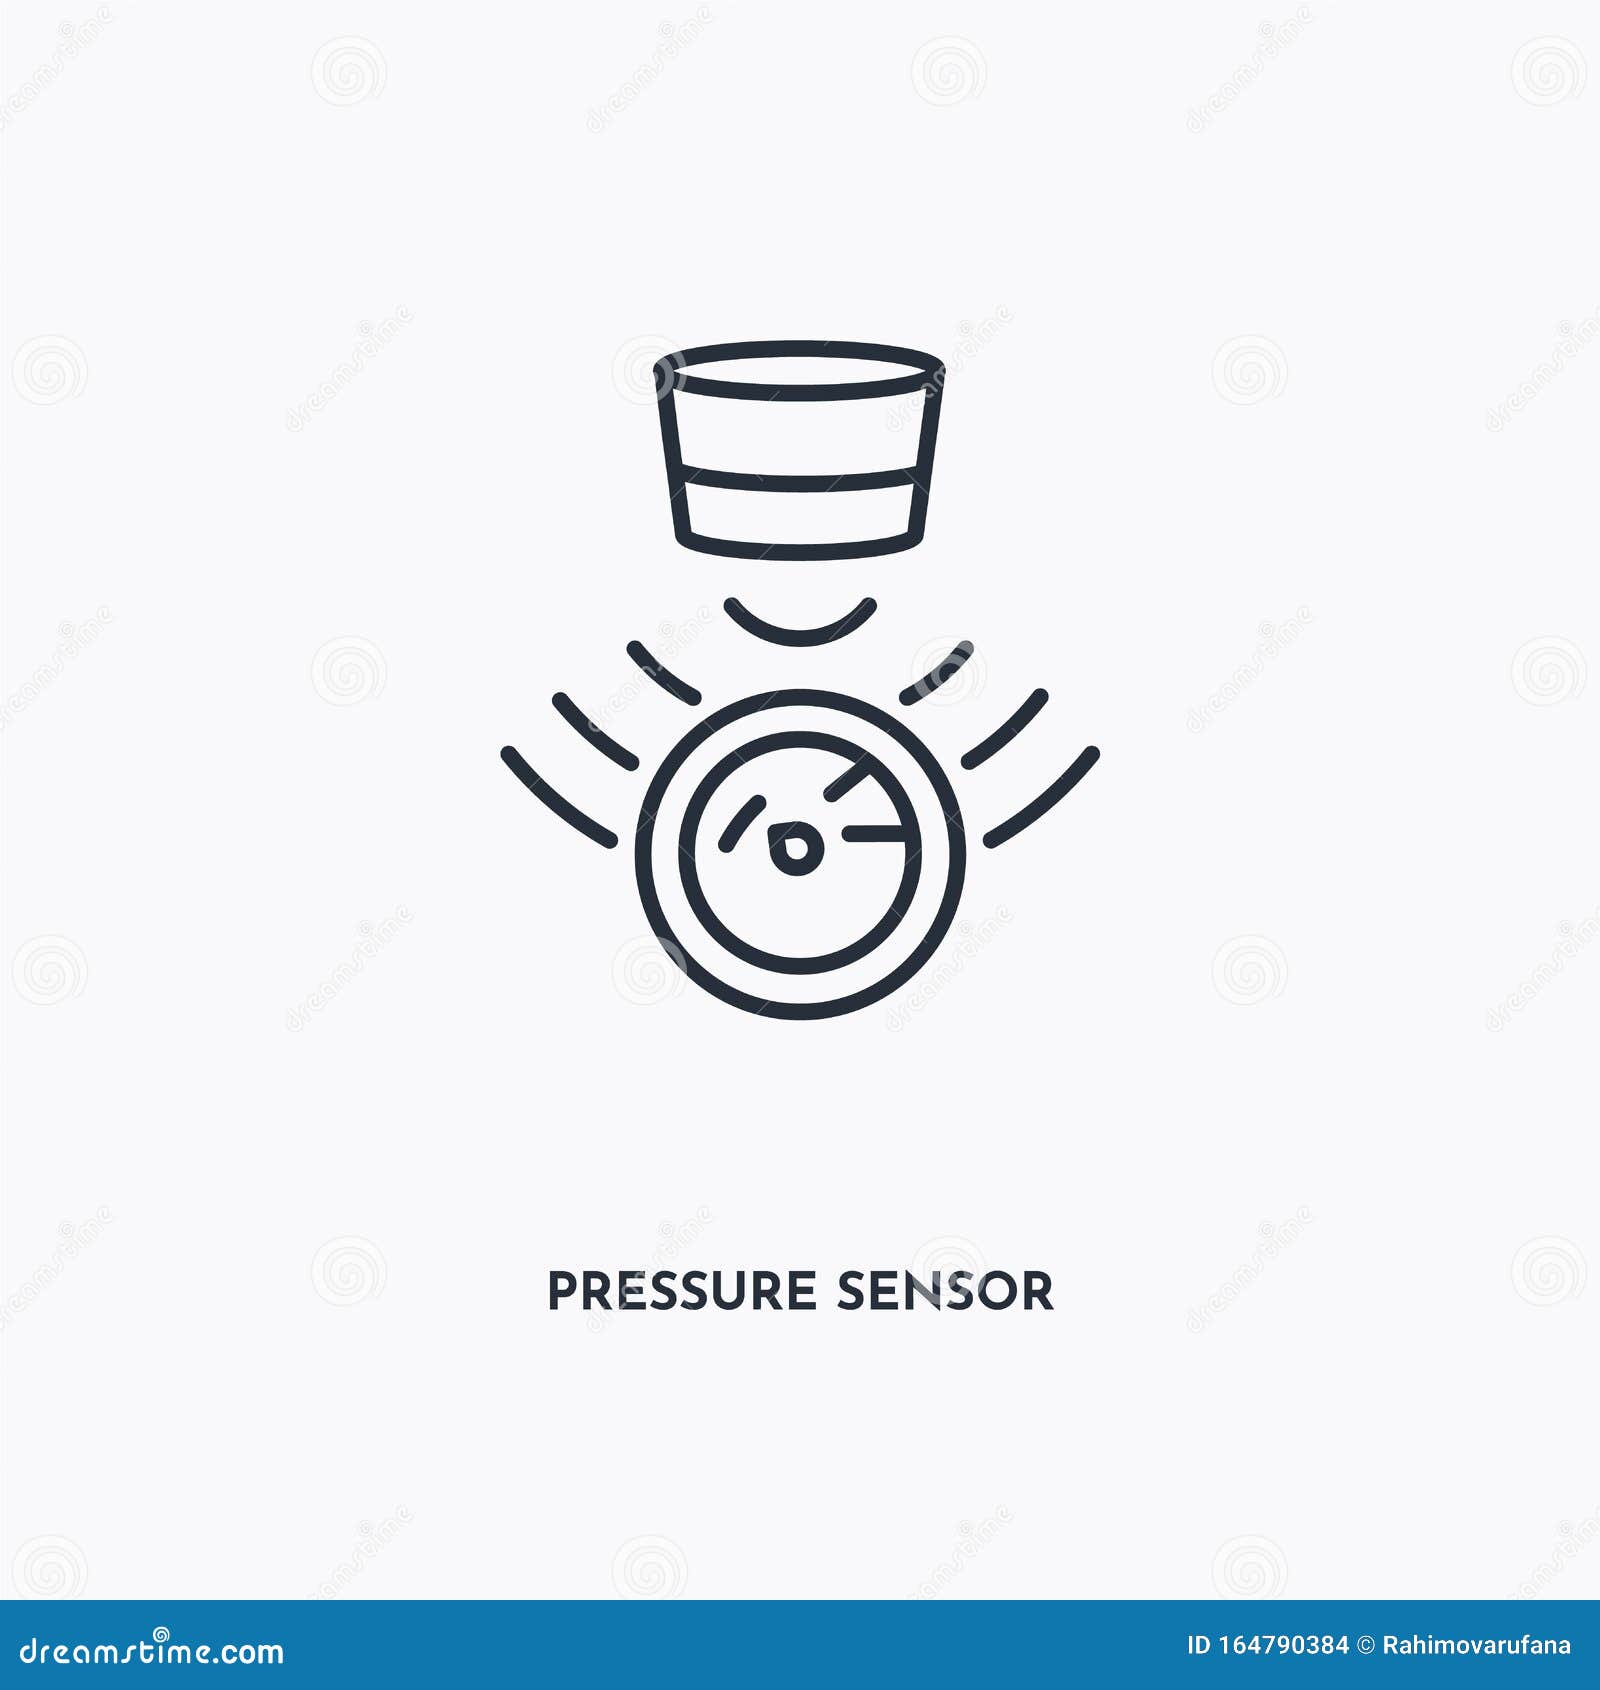 pressure sensor outline icon. simple linear  .  line pressure sensor icon on white background. thin